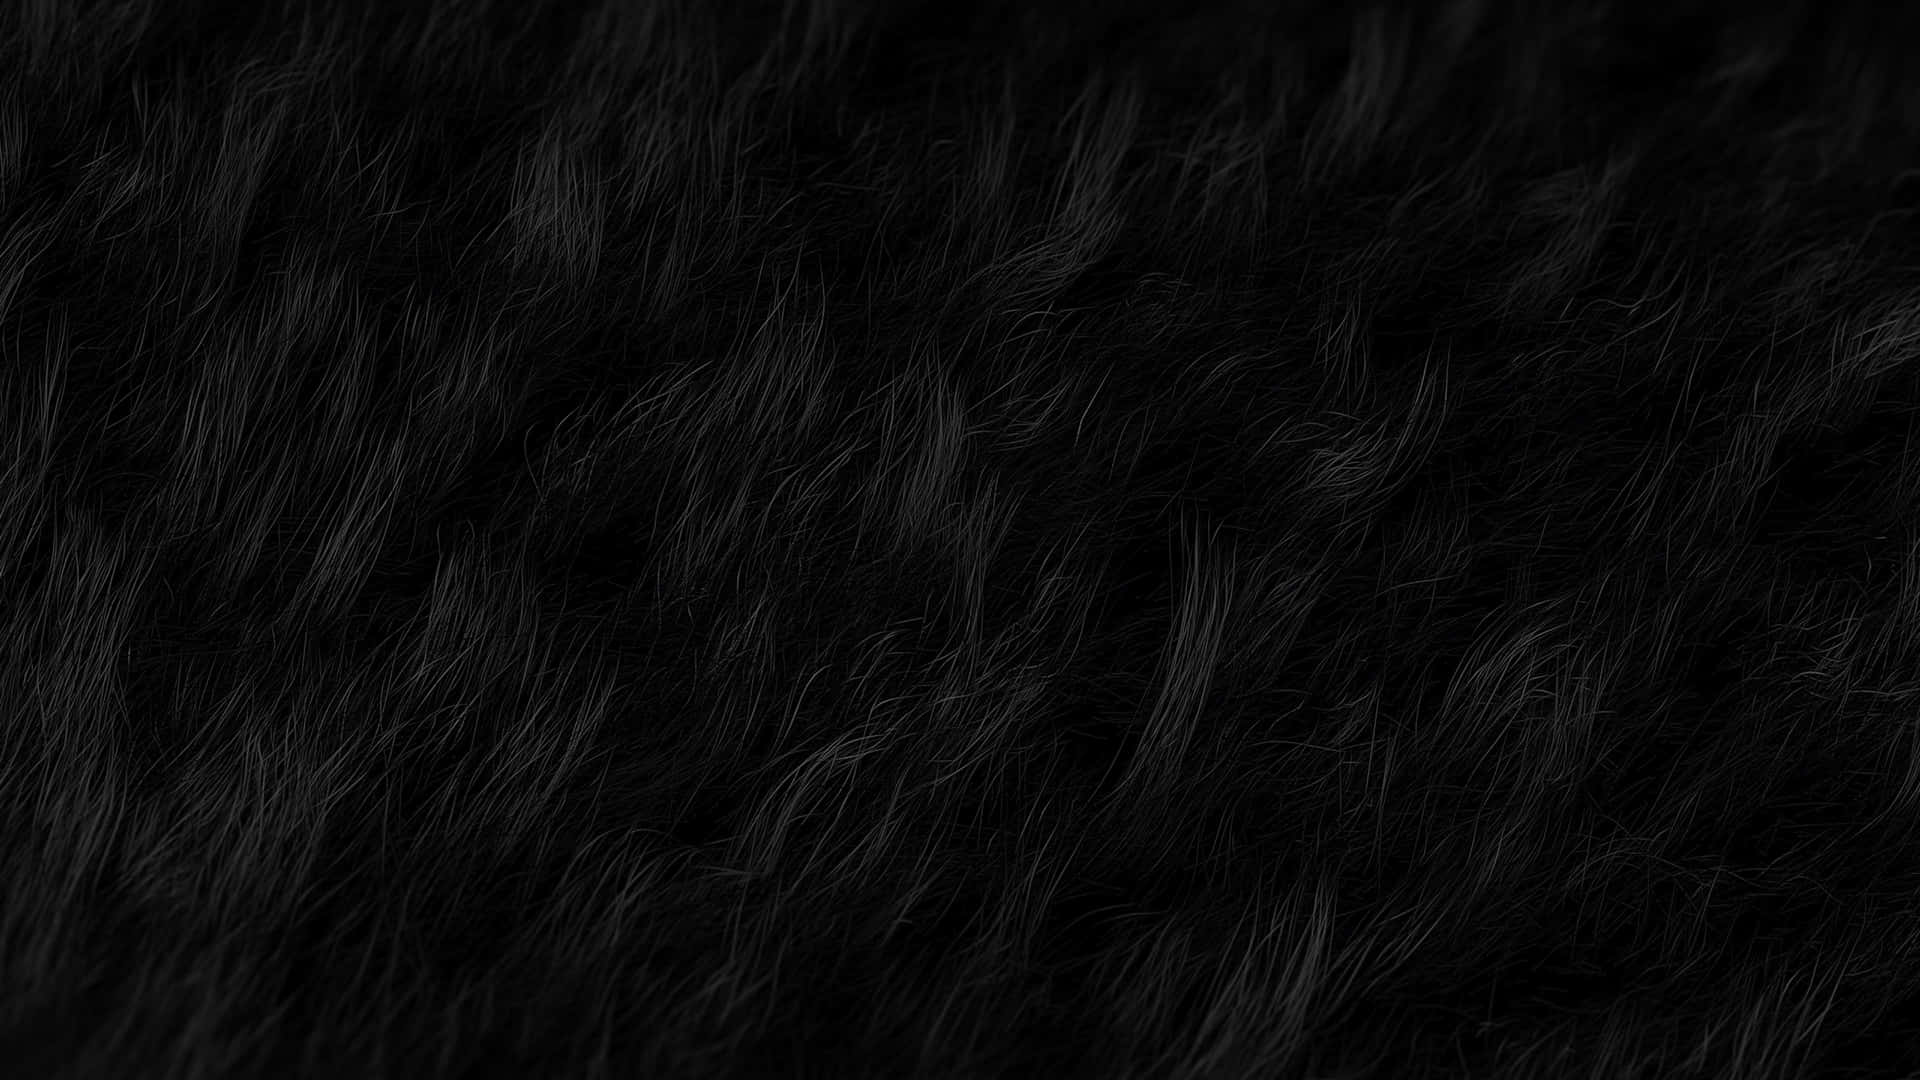 Black_ Textured_ Hair_ Closeup.jpg Wallpaper